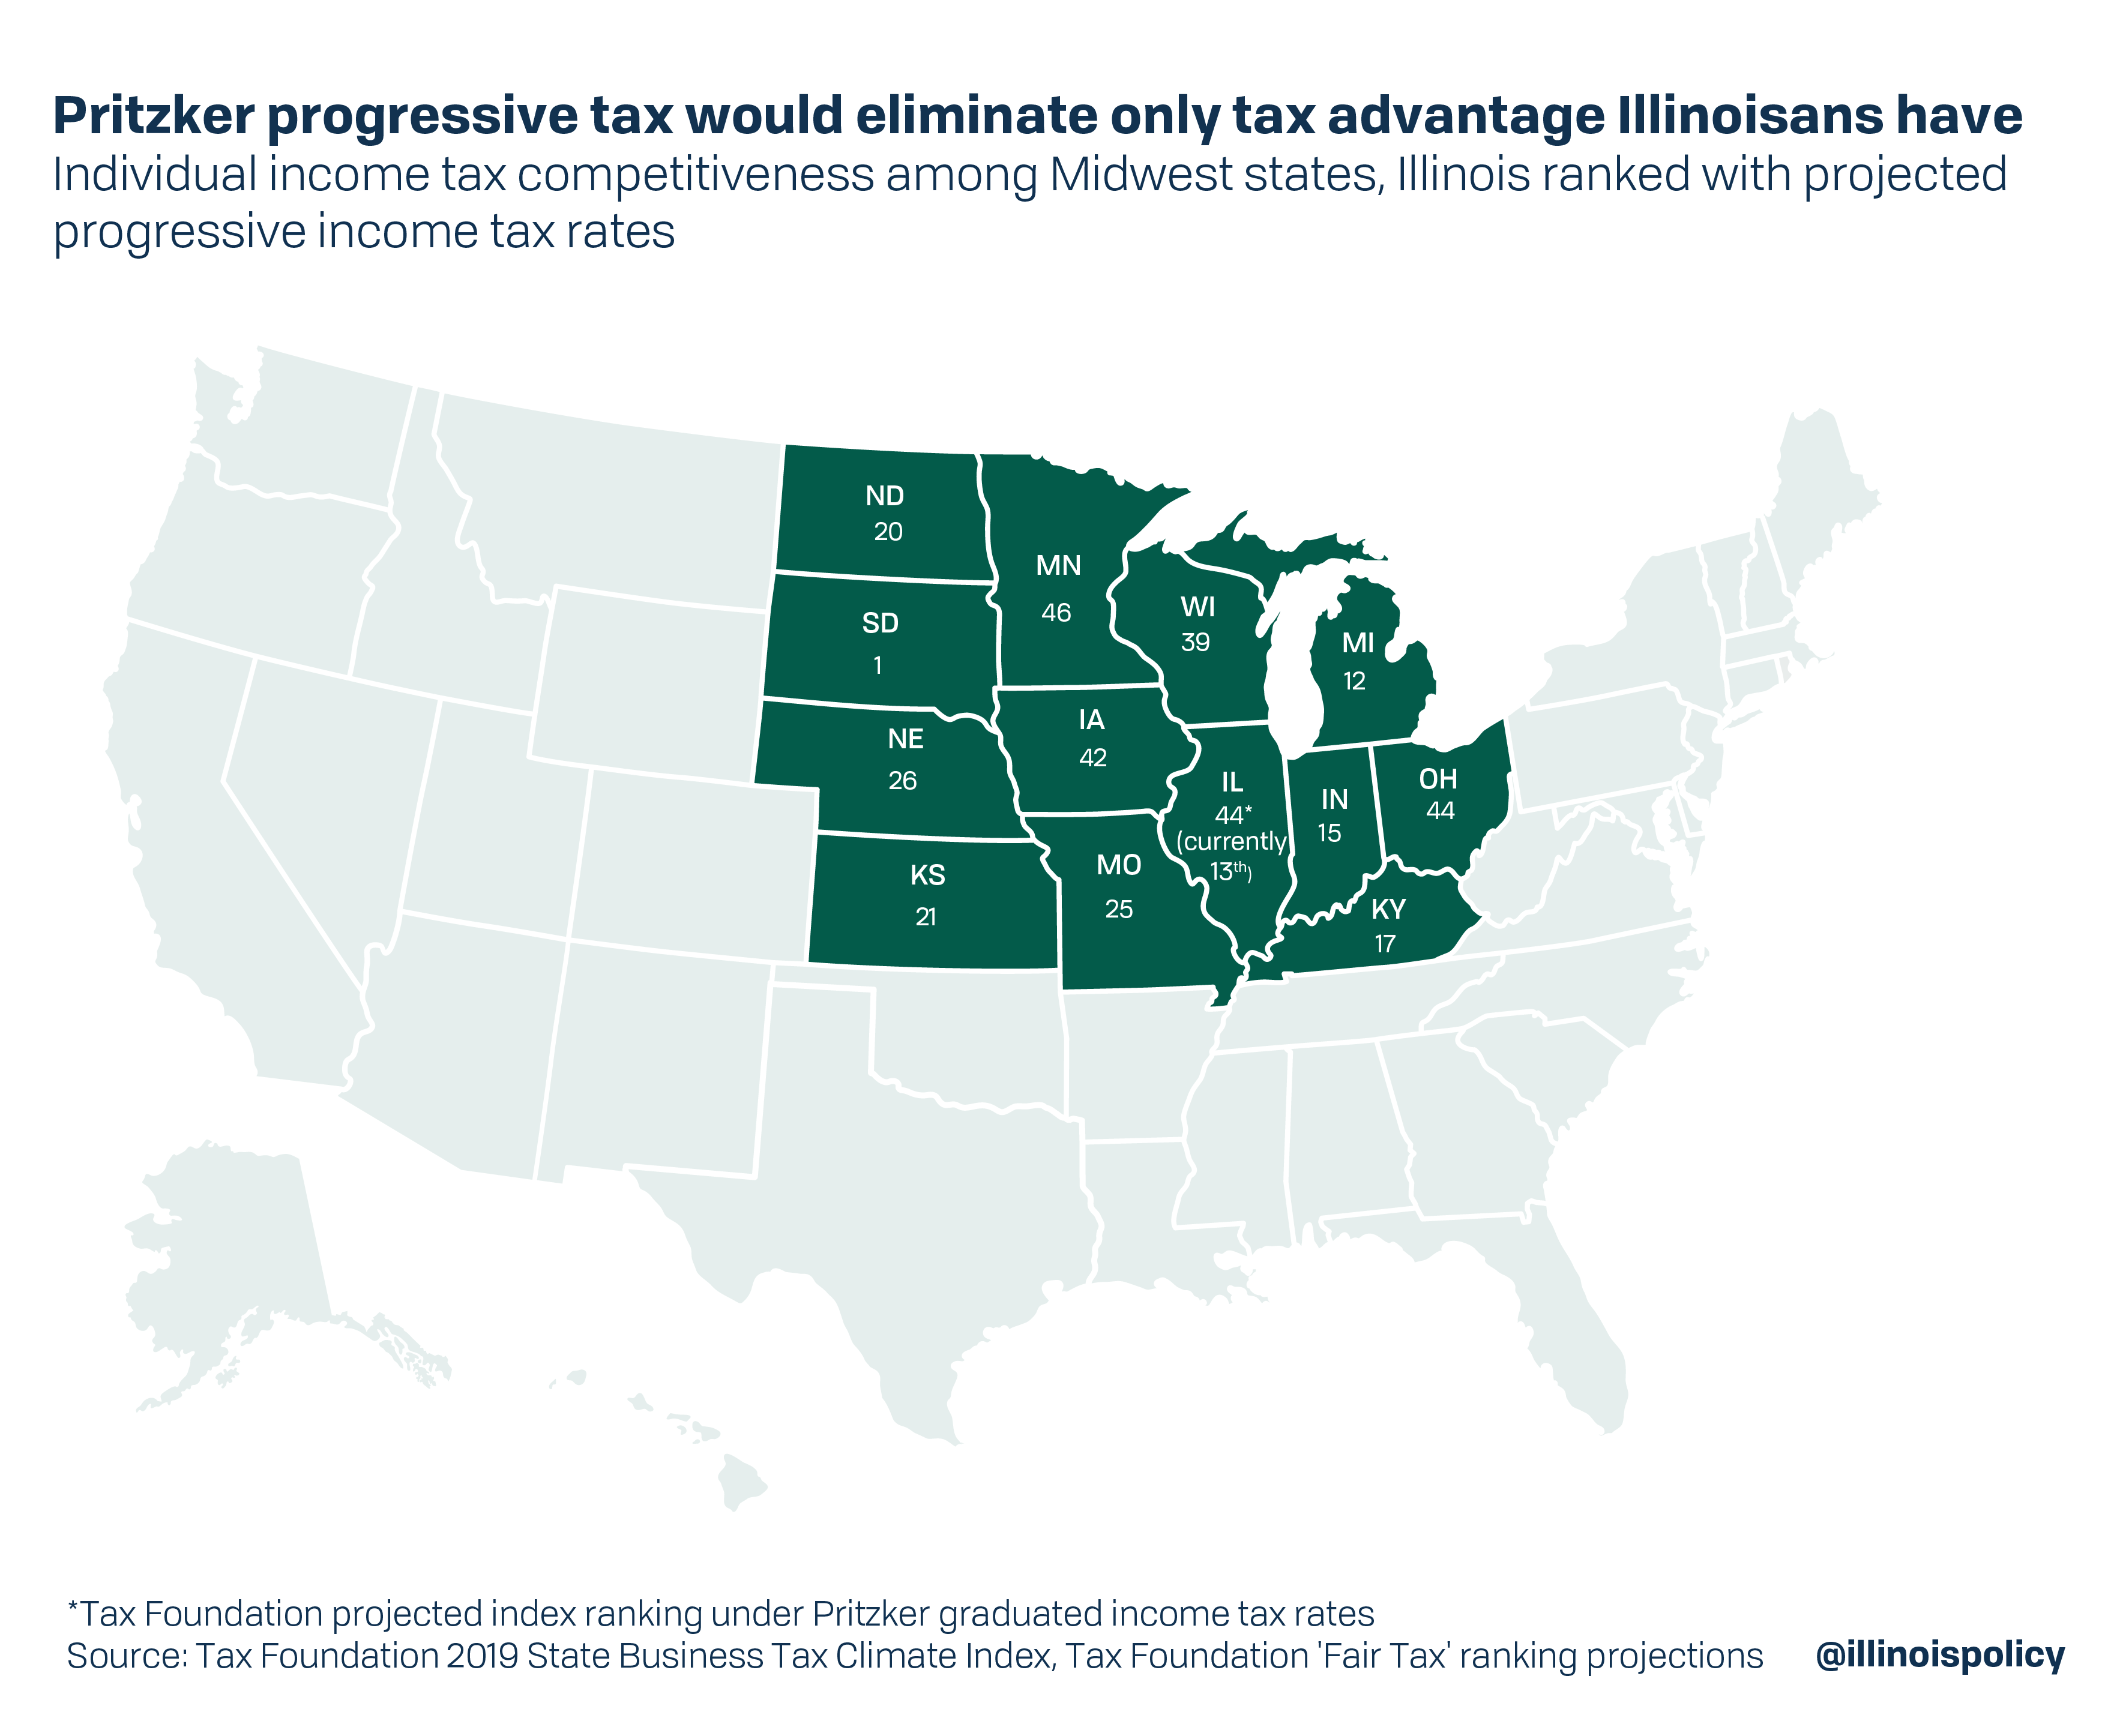 Pritzker progressive tax would eliminate the only tax advantage Illinoisans have